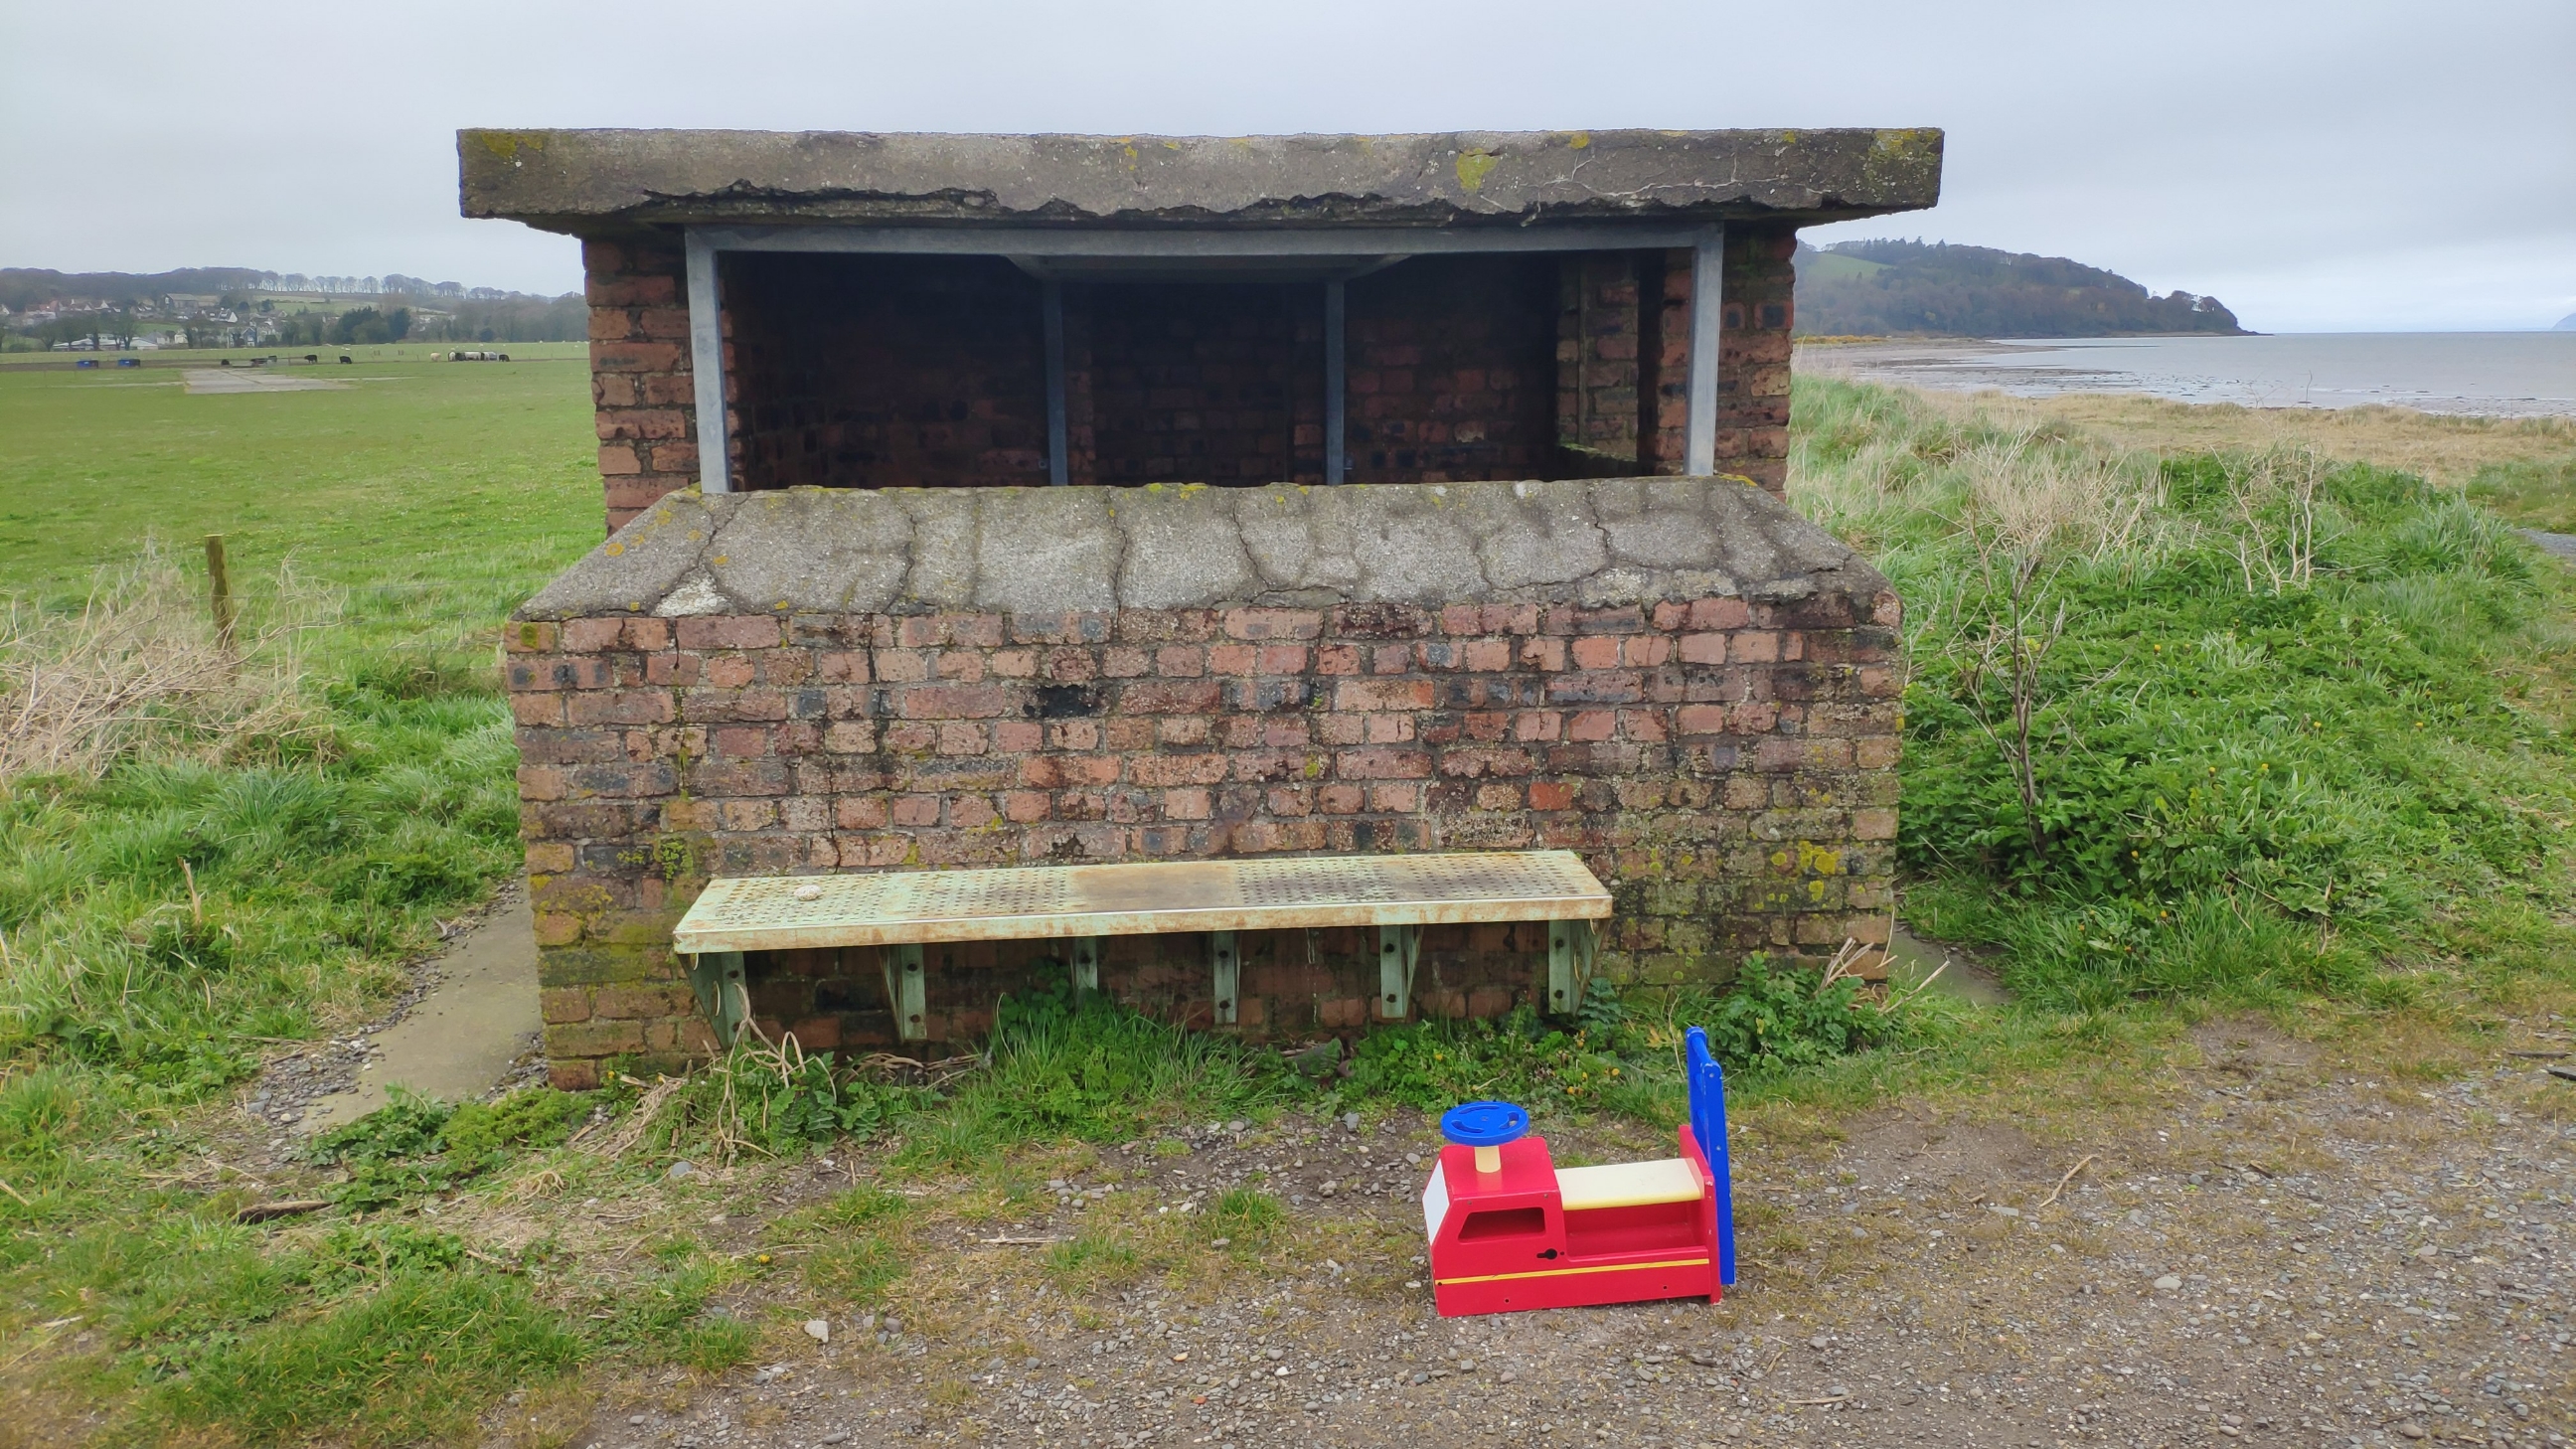 Frontage of observation post